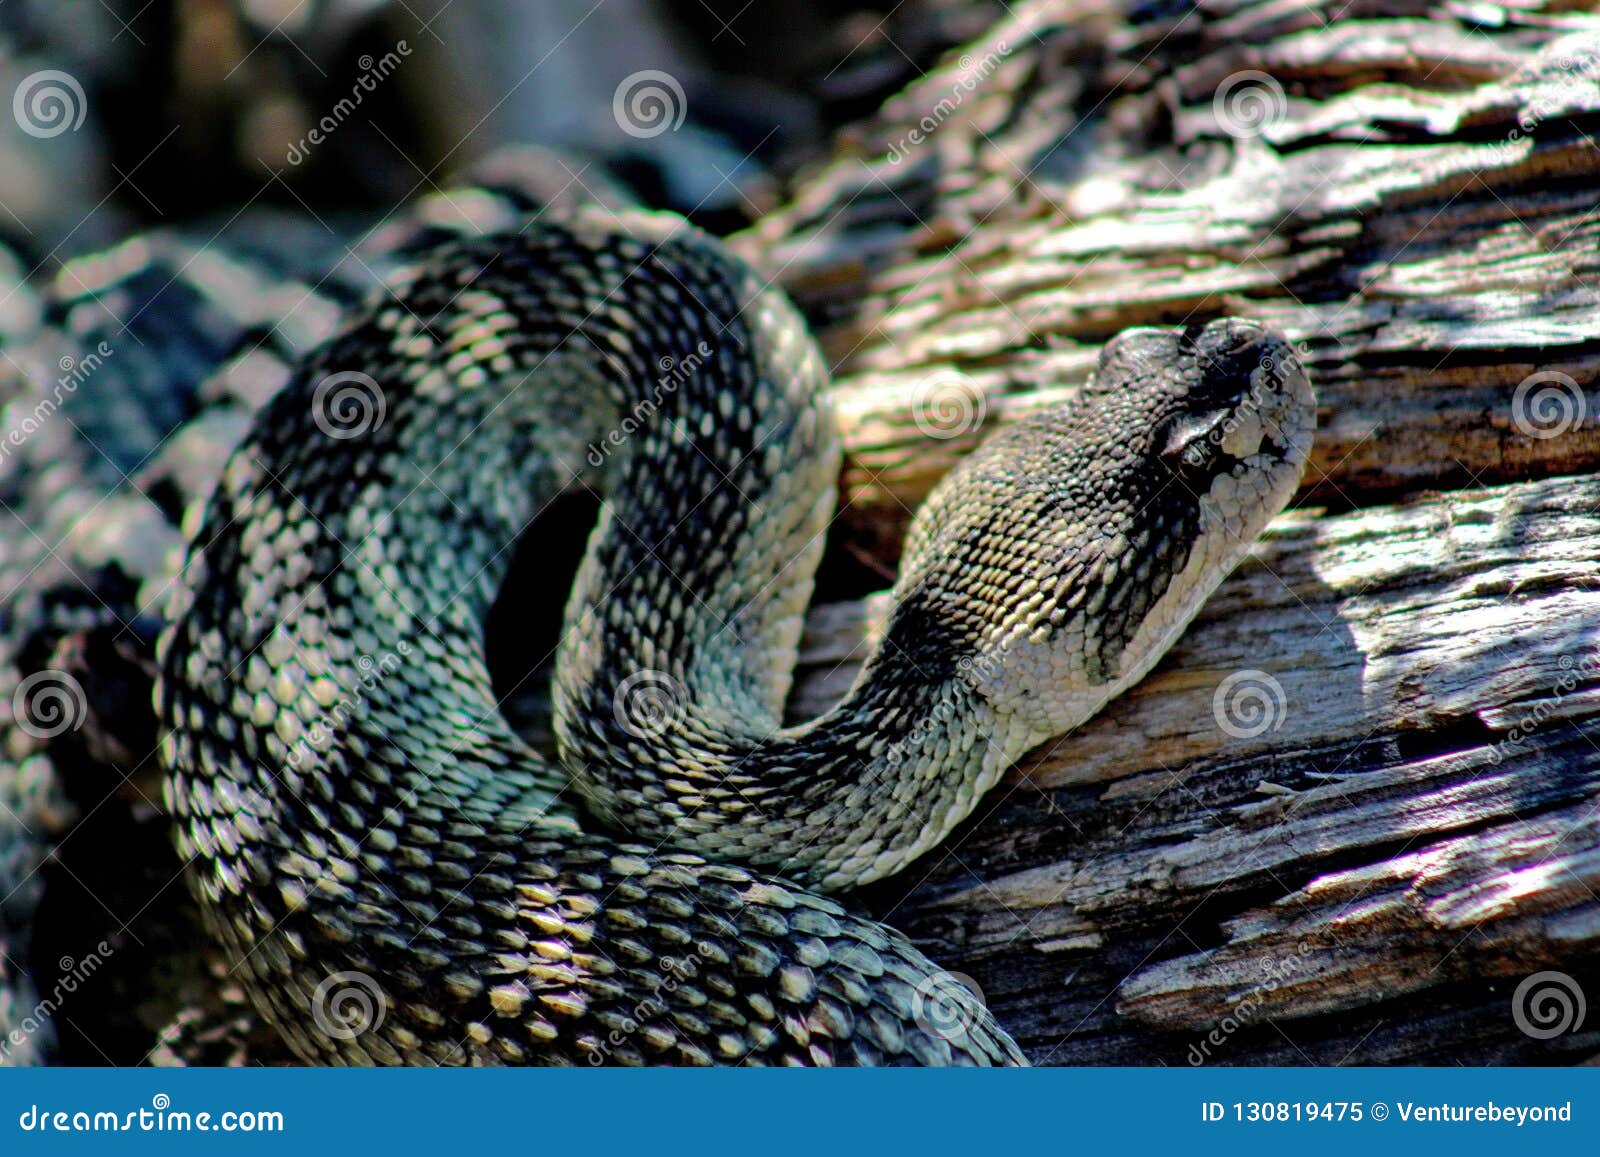 adult northern pacific rattlesnake, siskiyou county, northern california, usa